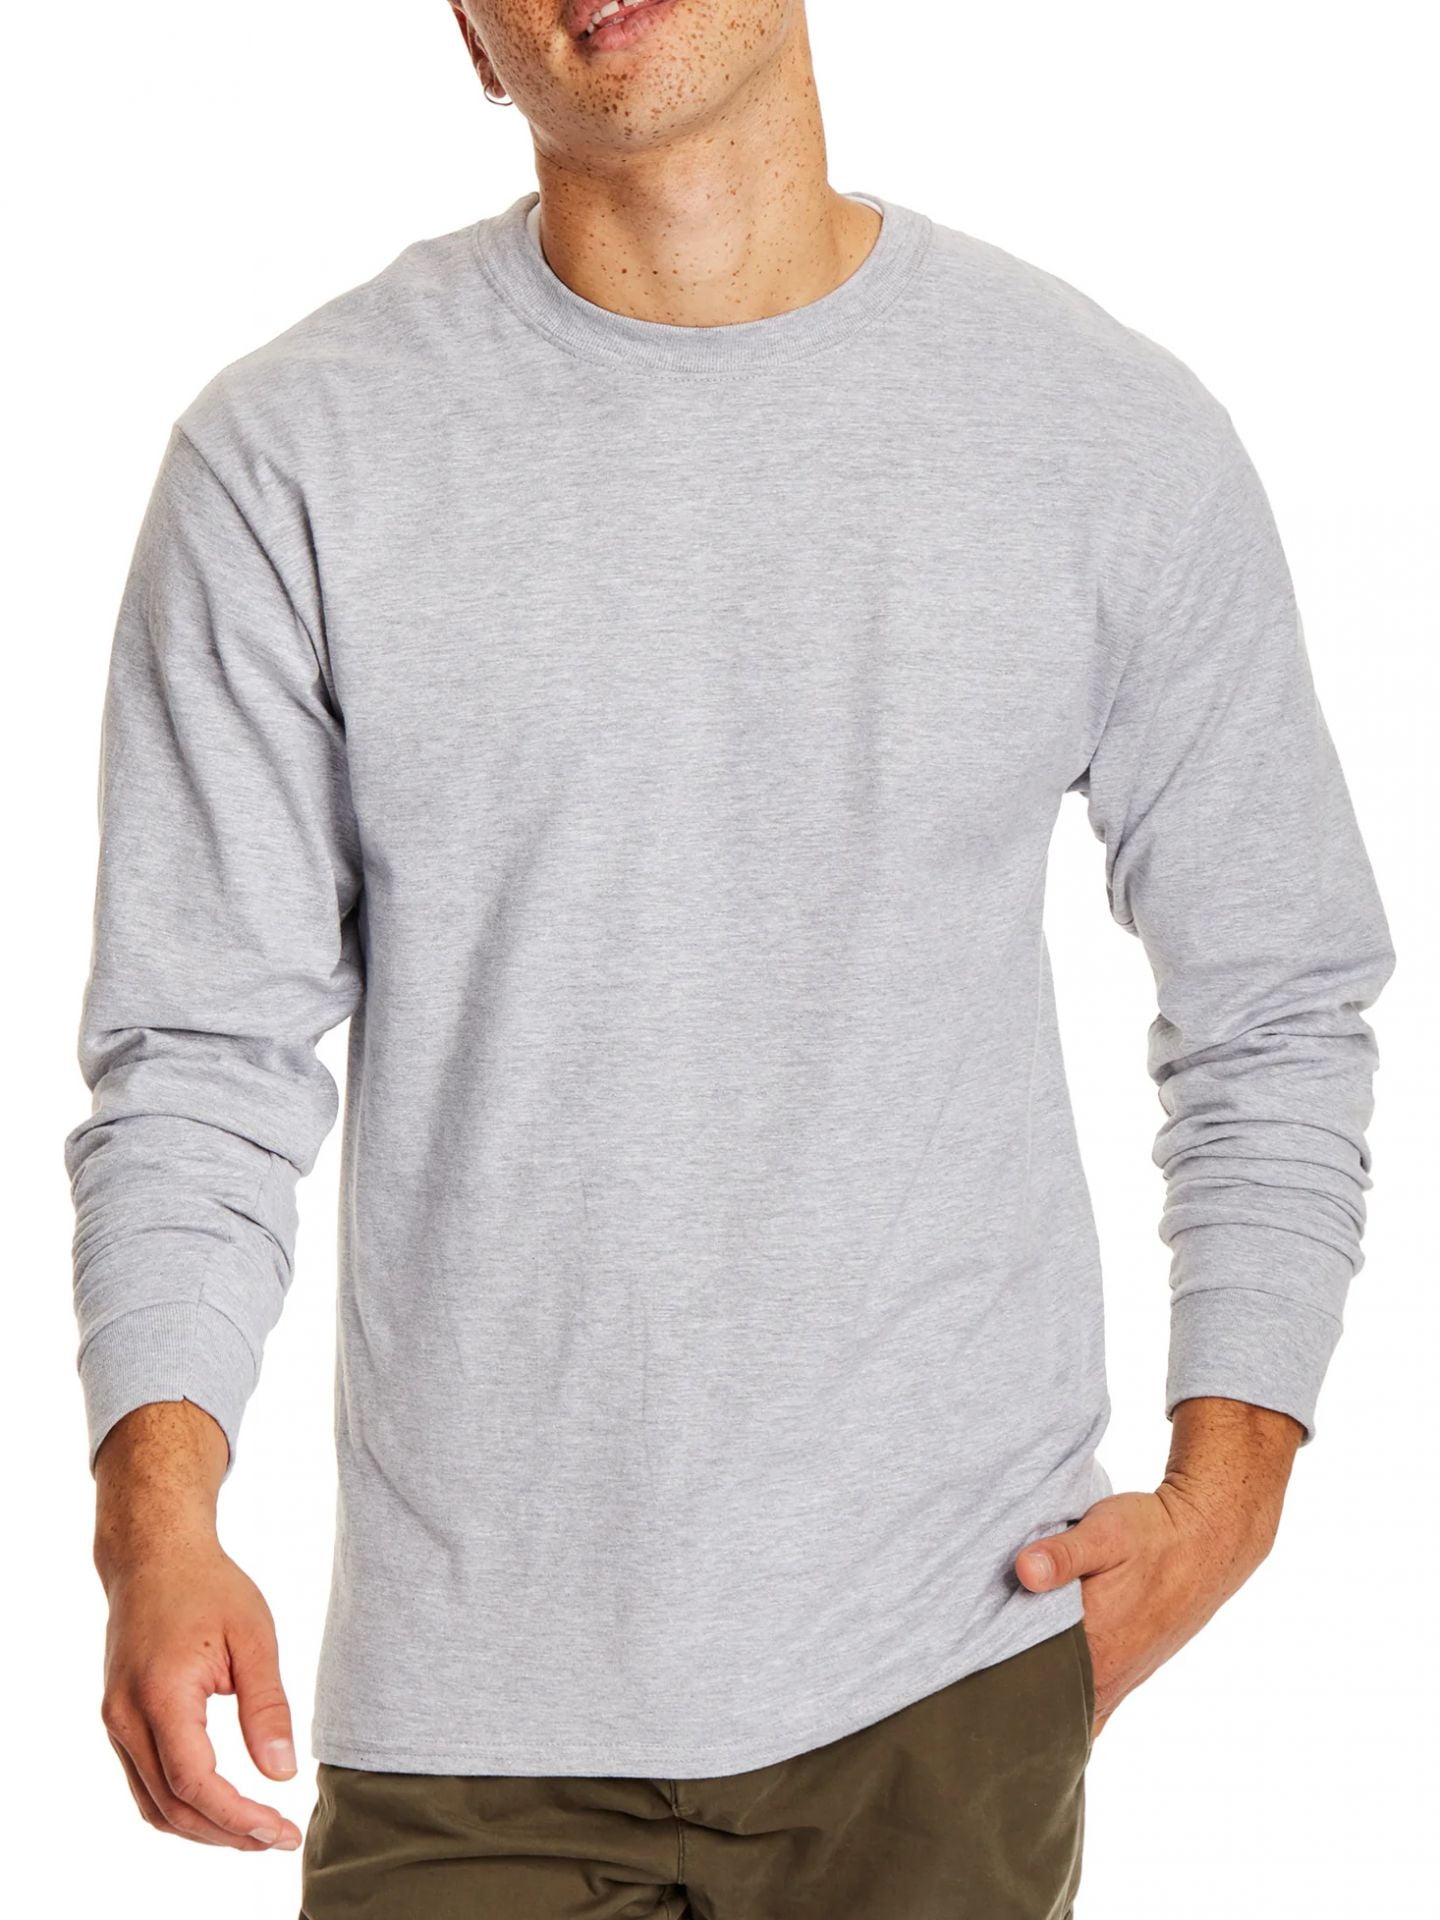 Hanes Long Sleeve Beefy-T T-Shirts, Light Steel, Large - Walmart.com